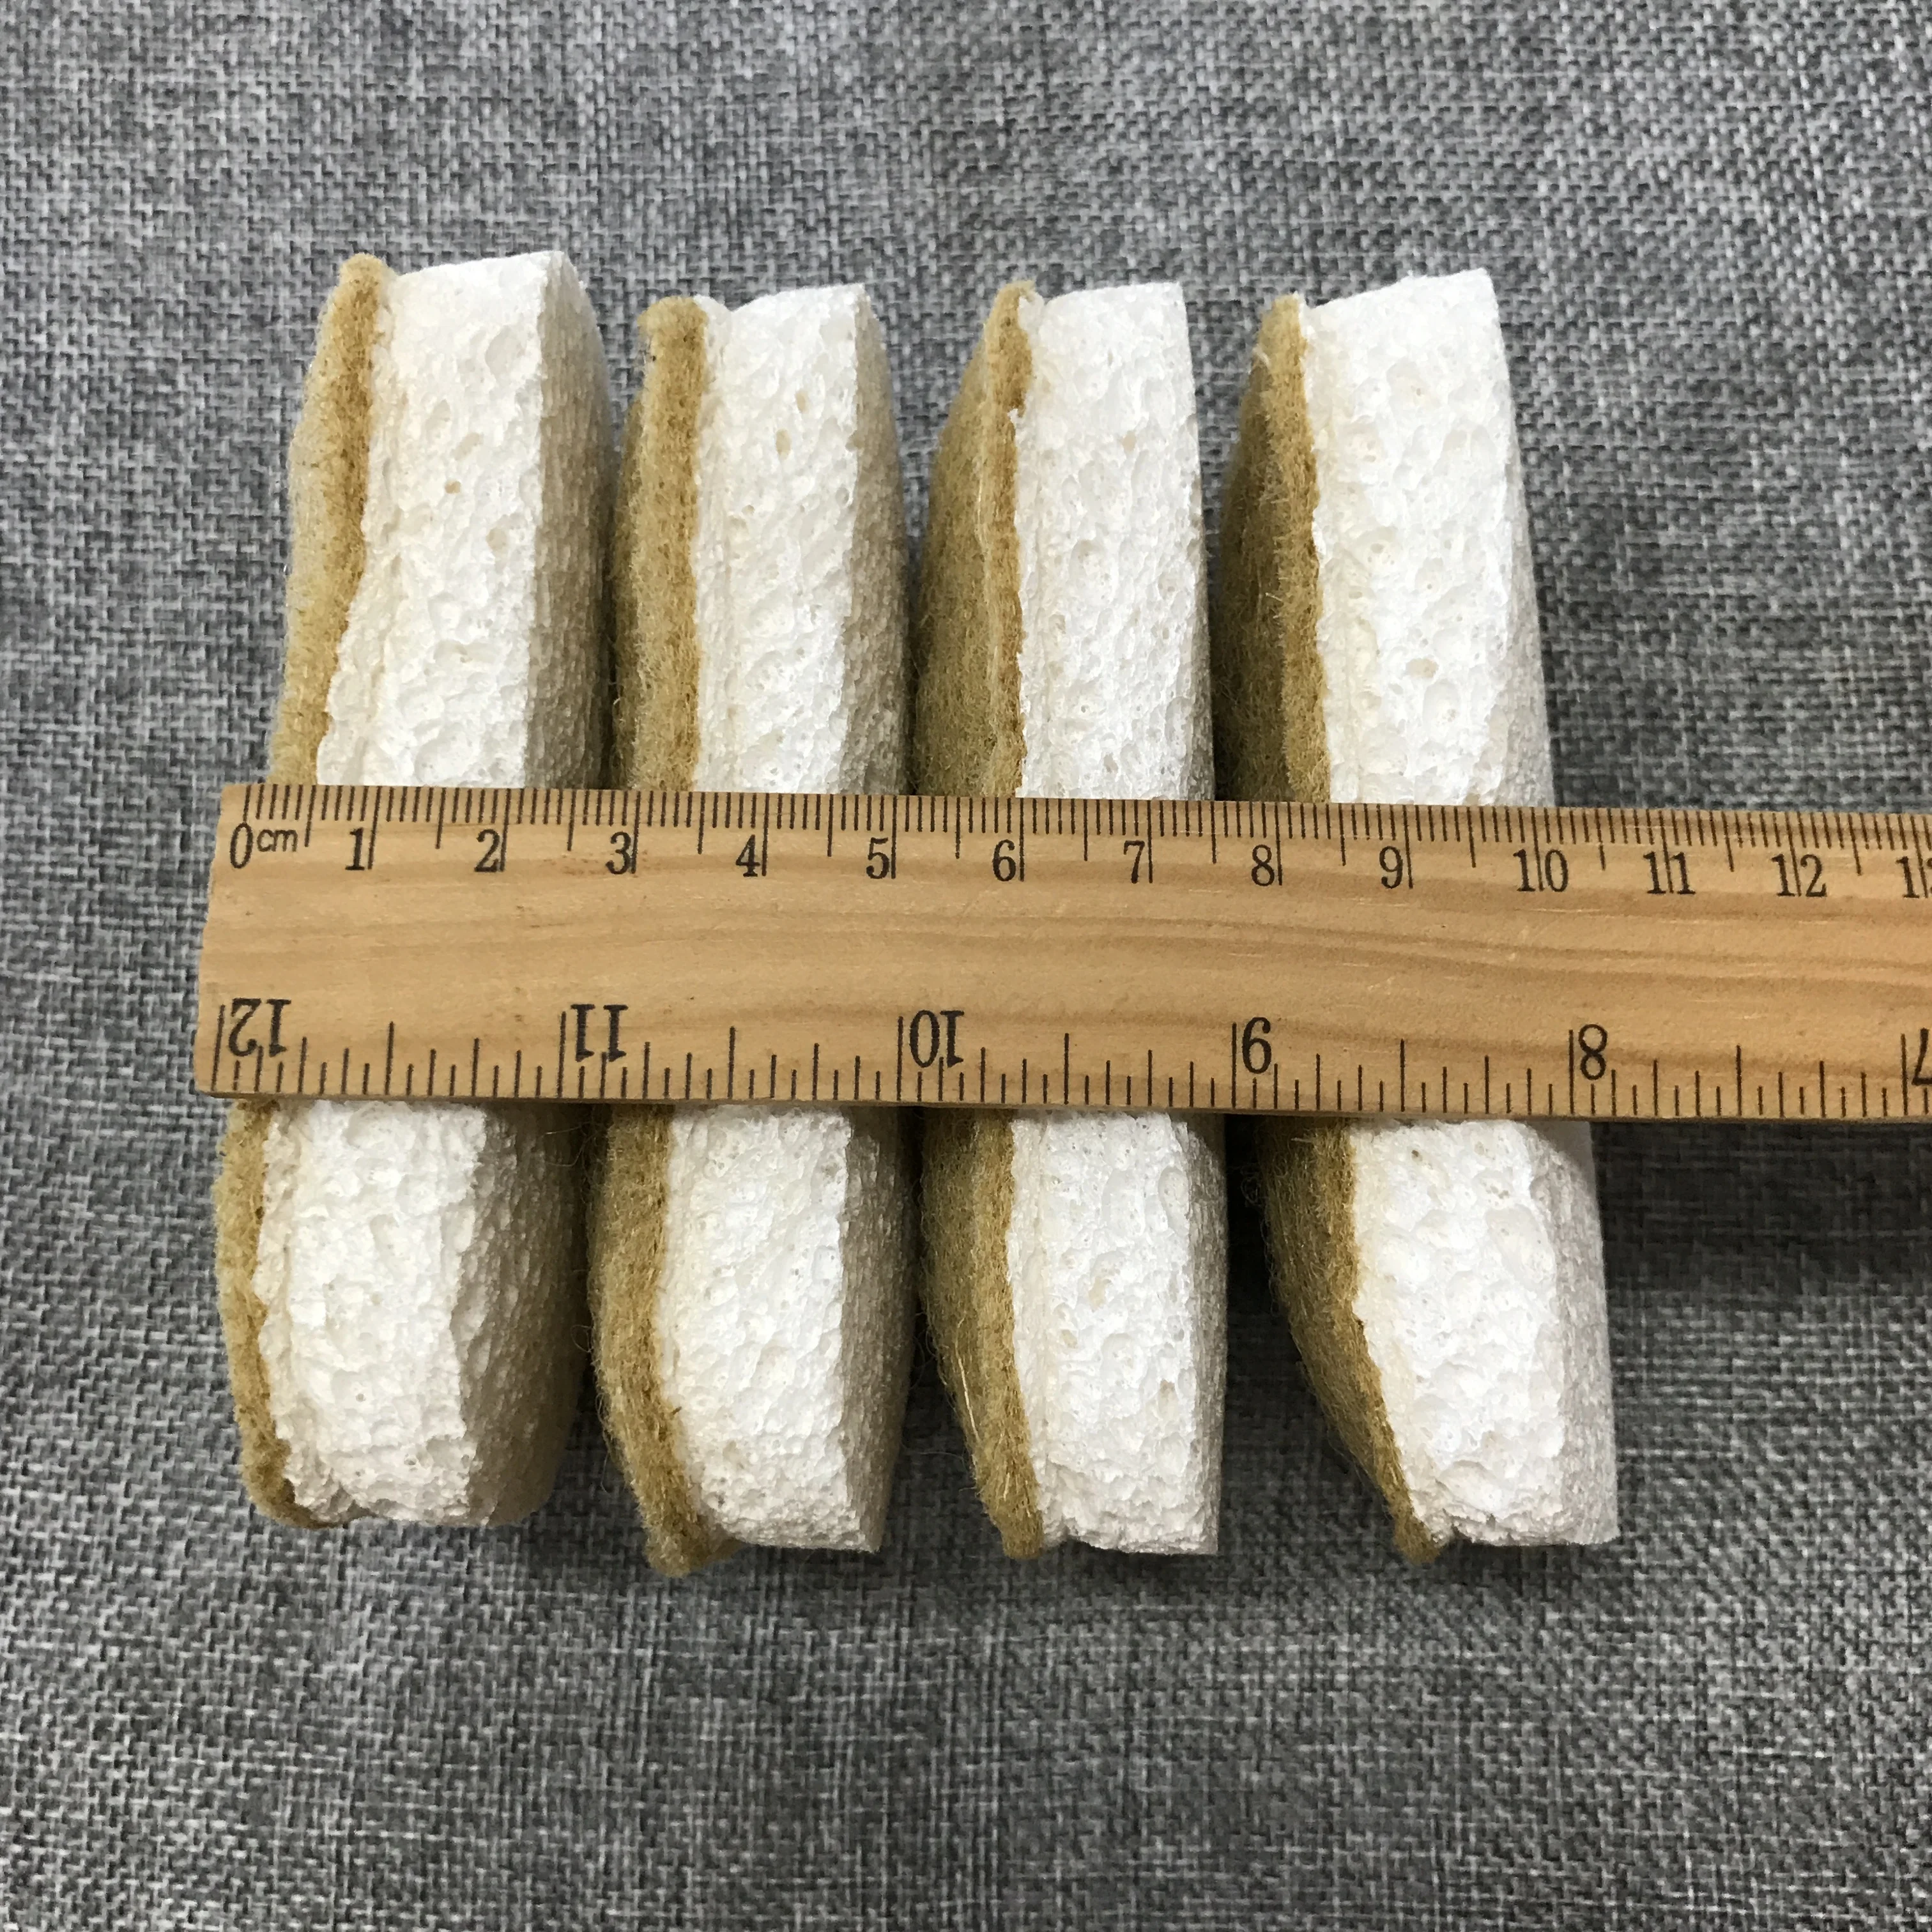 CK020-1 Absorbent Dishcloth Cellulose Sponge Wood Cloths 7*11cm Sisal Scrub Dishwashing Cellulose Cleaning Sponges